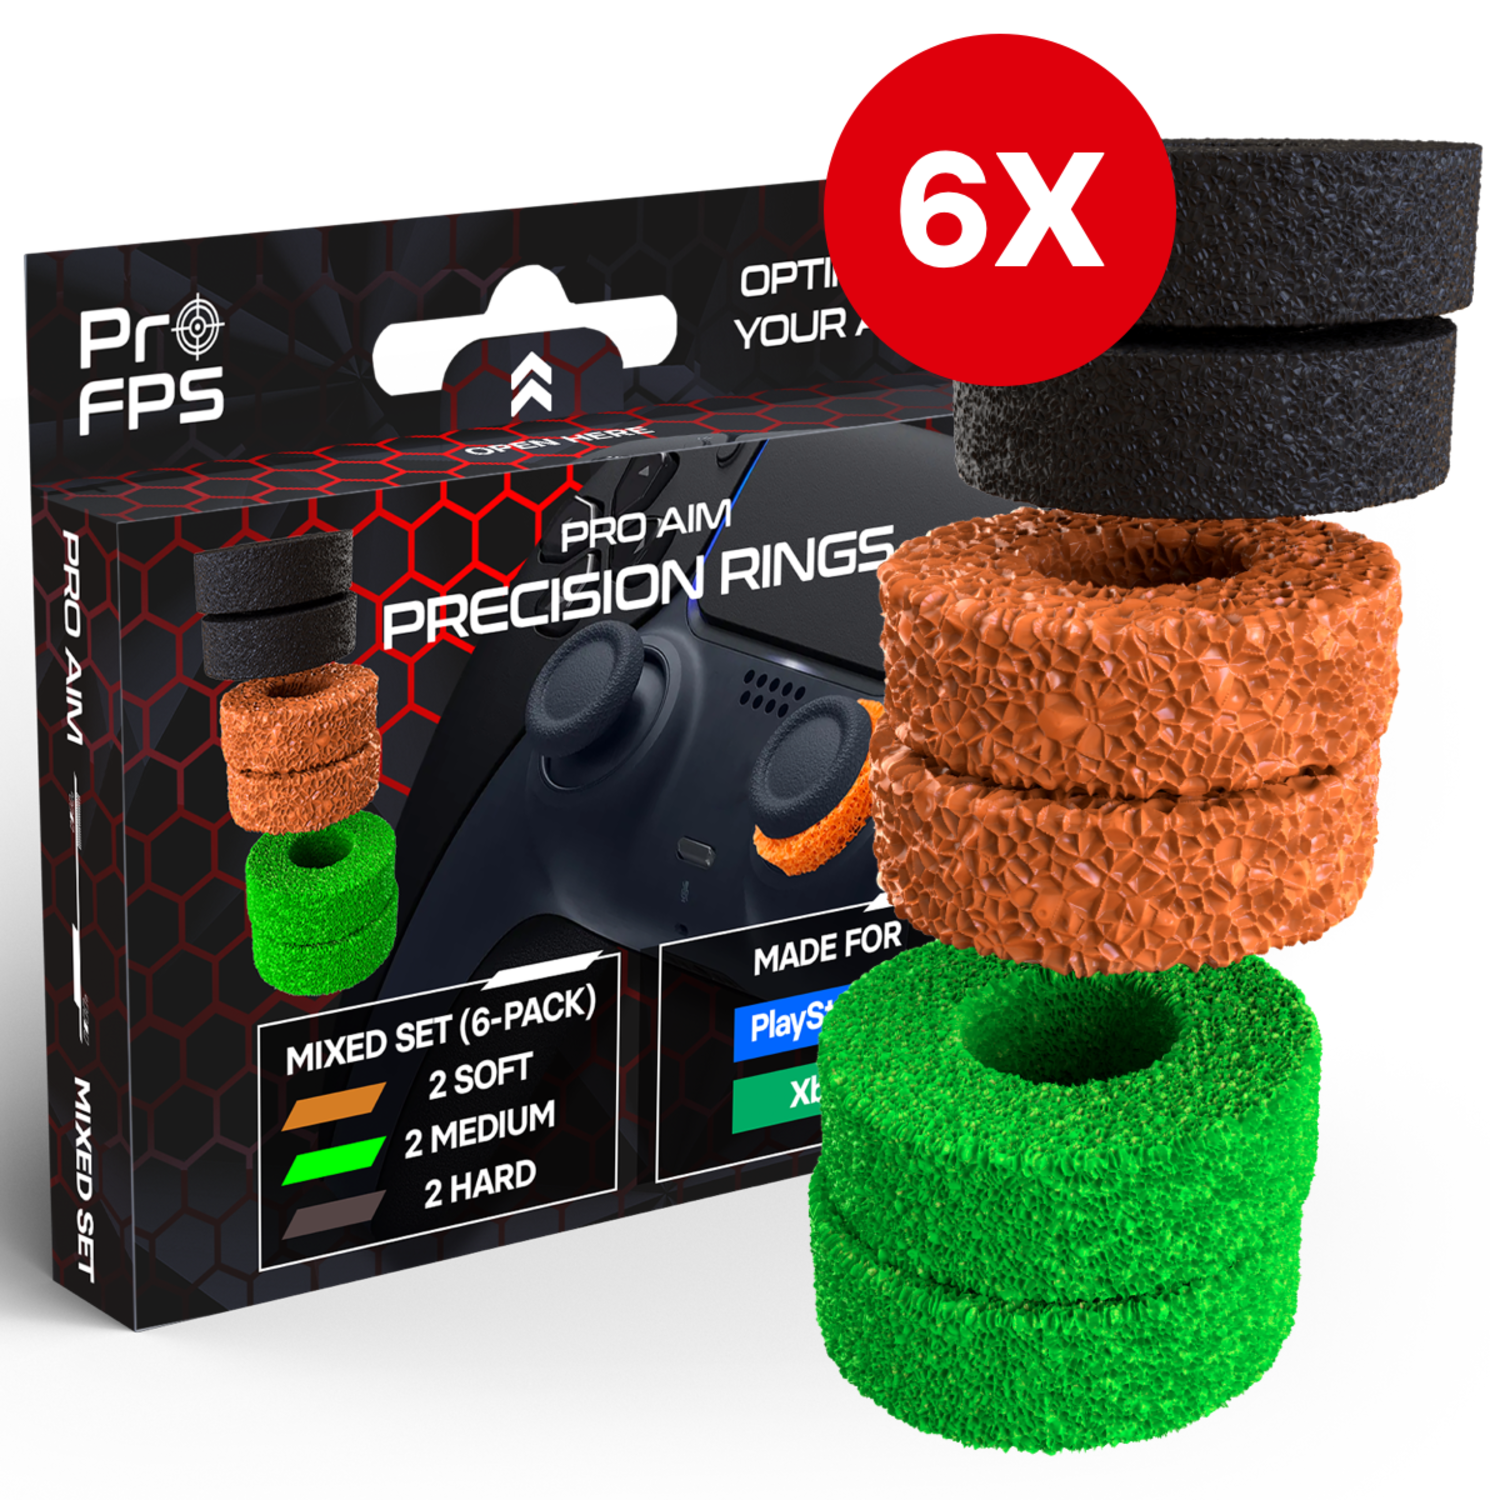 ProFPS PS5 Zubehör / PS4 Zubehör - 6x Precision Rings & 2x Mixed PS5 Sticks  & 15er-Set